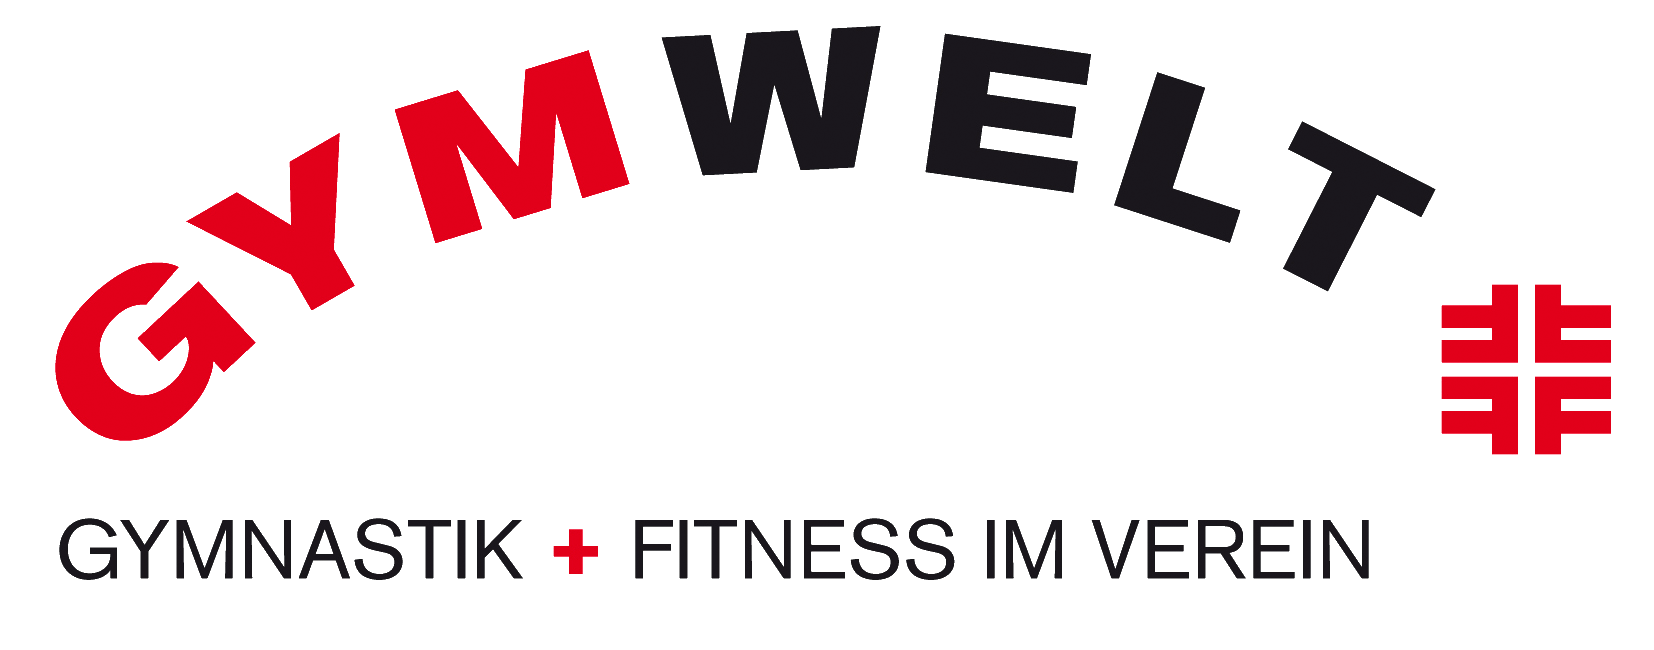 Logo Gymwelt transparent